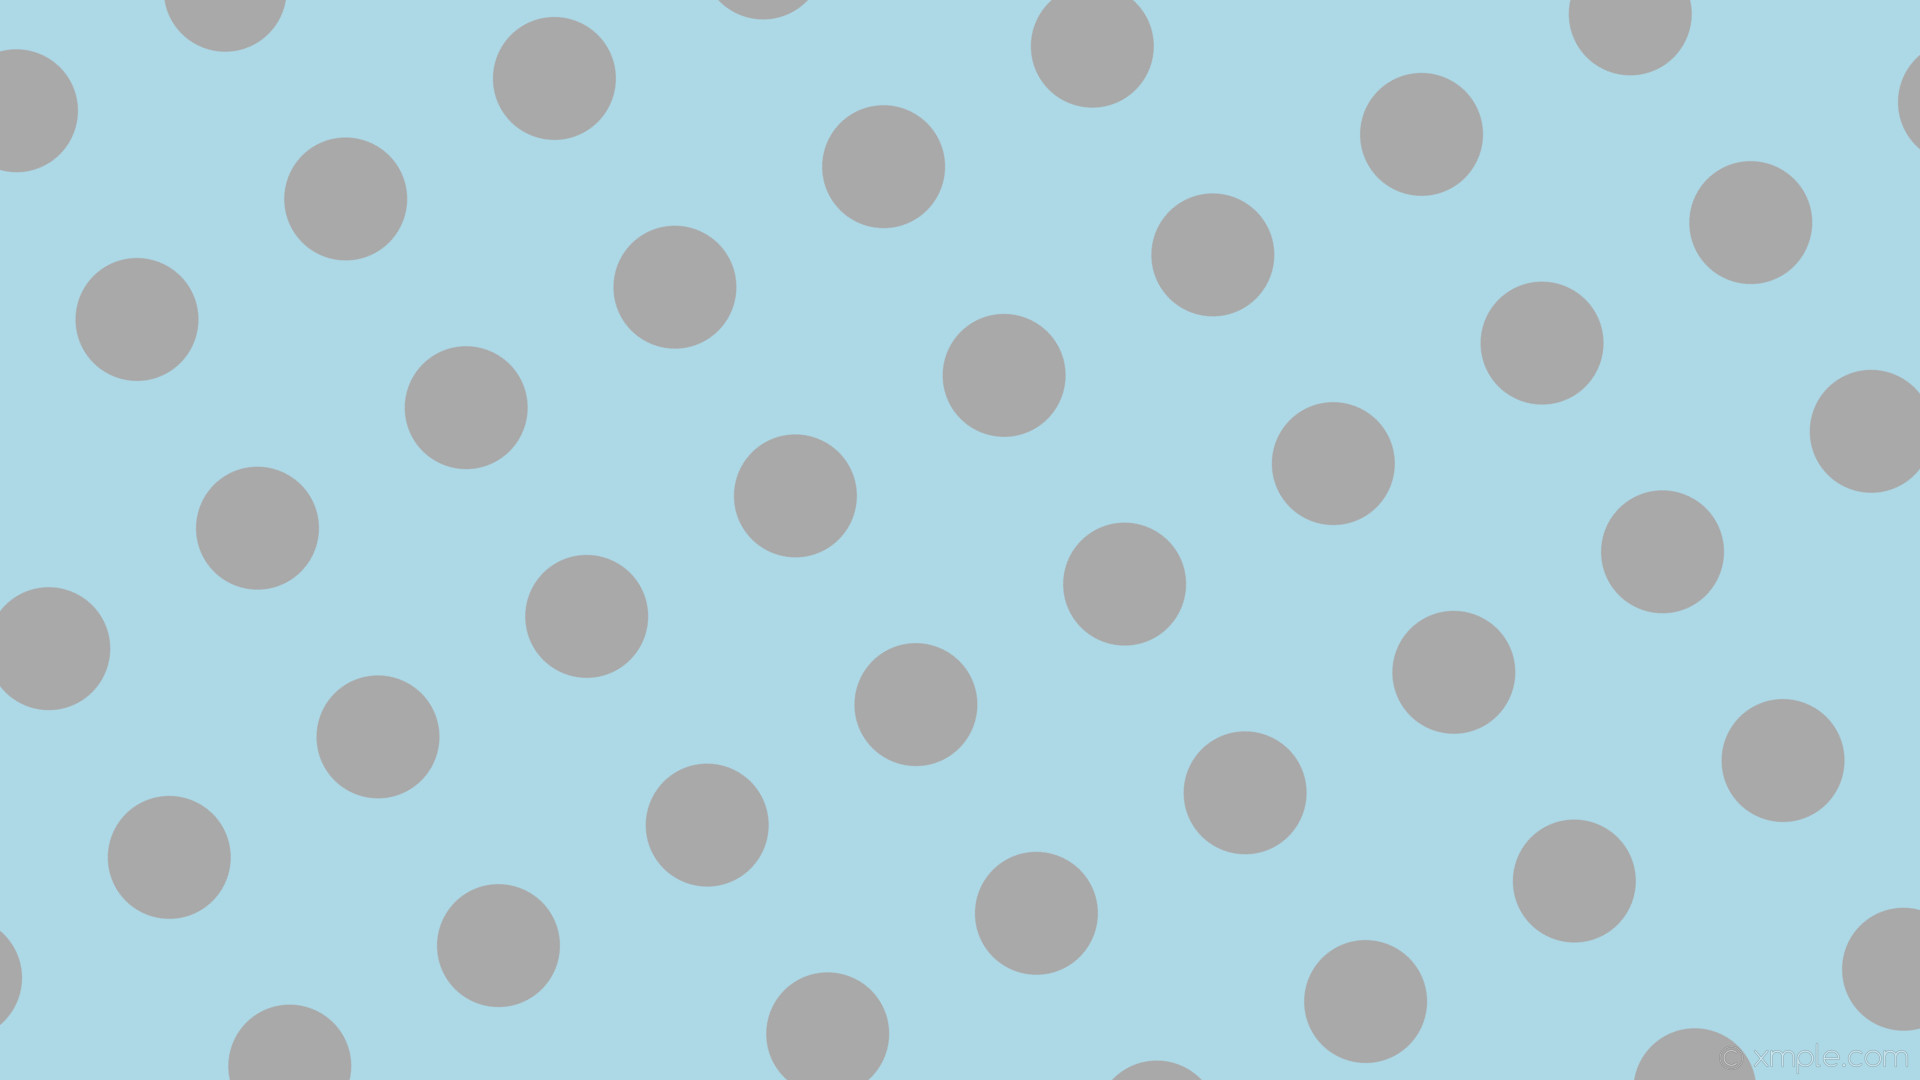 wallpaper spots blue grey polka dots light blue dark gray #add8e6 #a9a9a9  300Â°